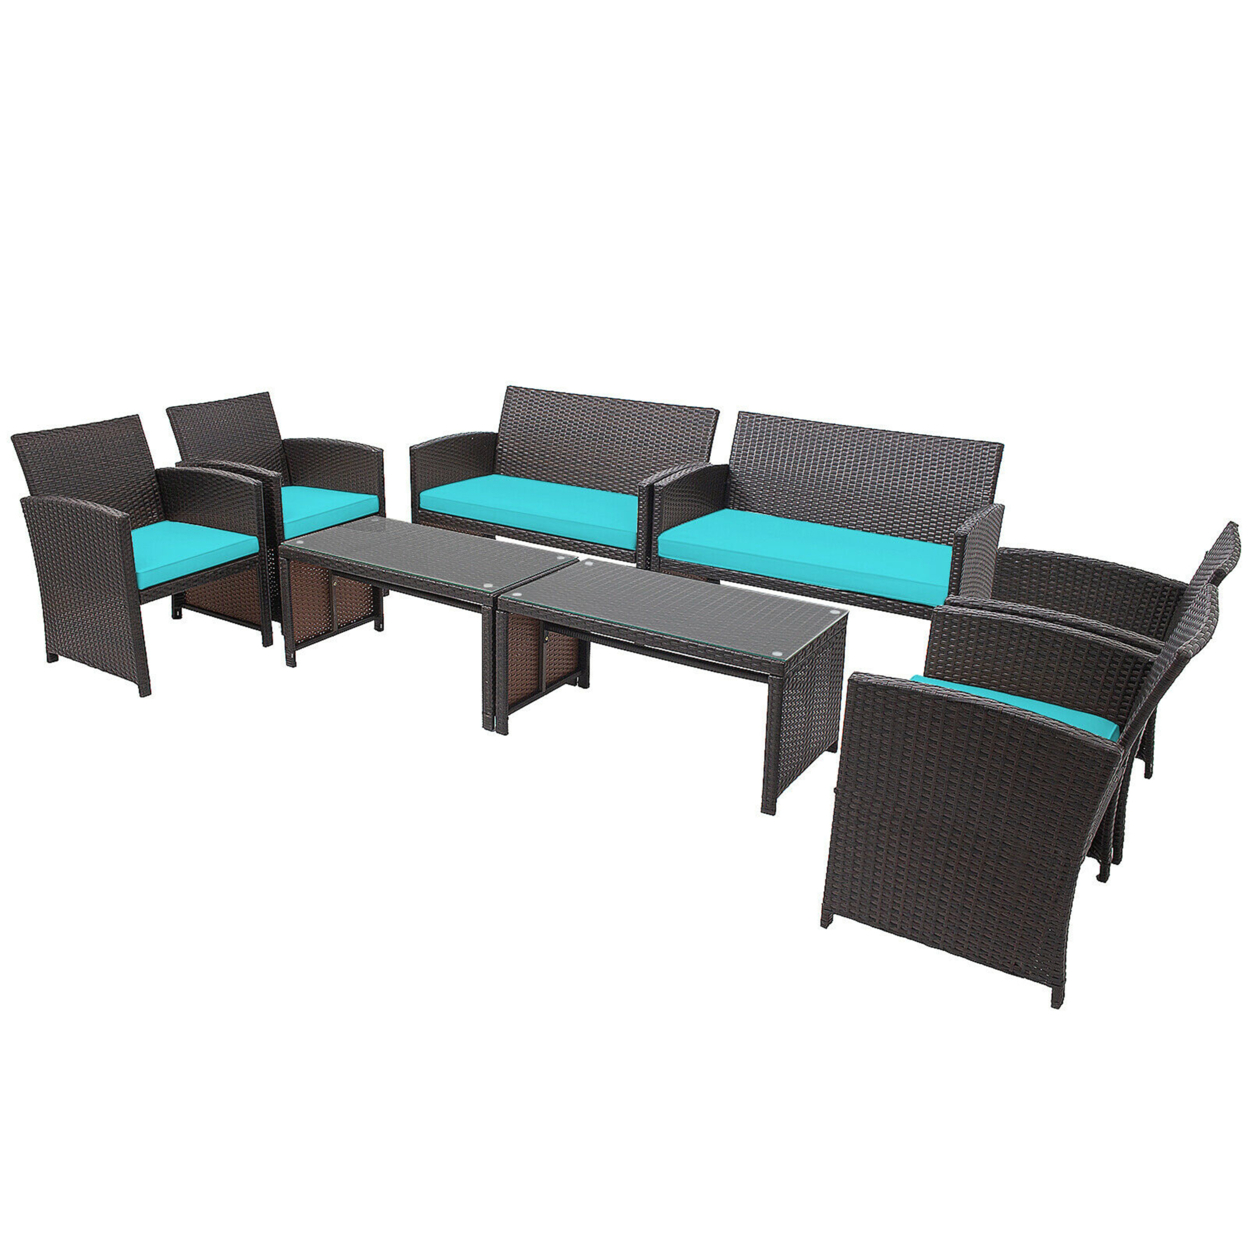 8PCS Patio Conversation Set Outdoor Rattan Furniture Set W/ Turquoise Cushions